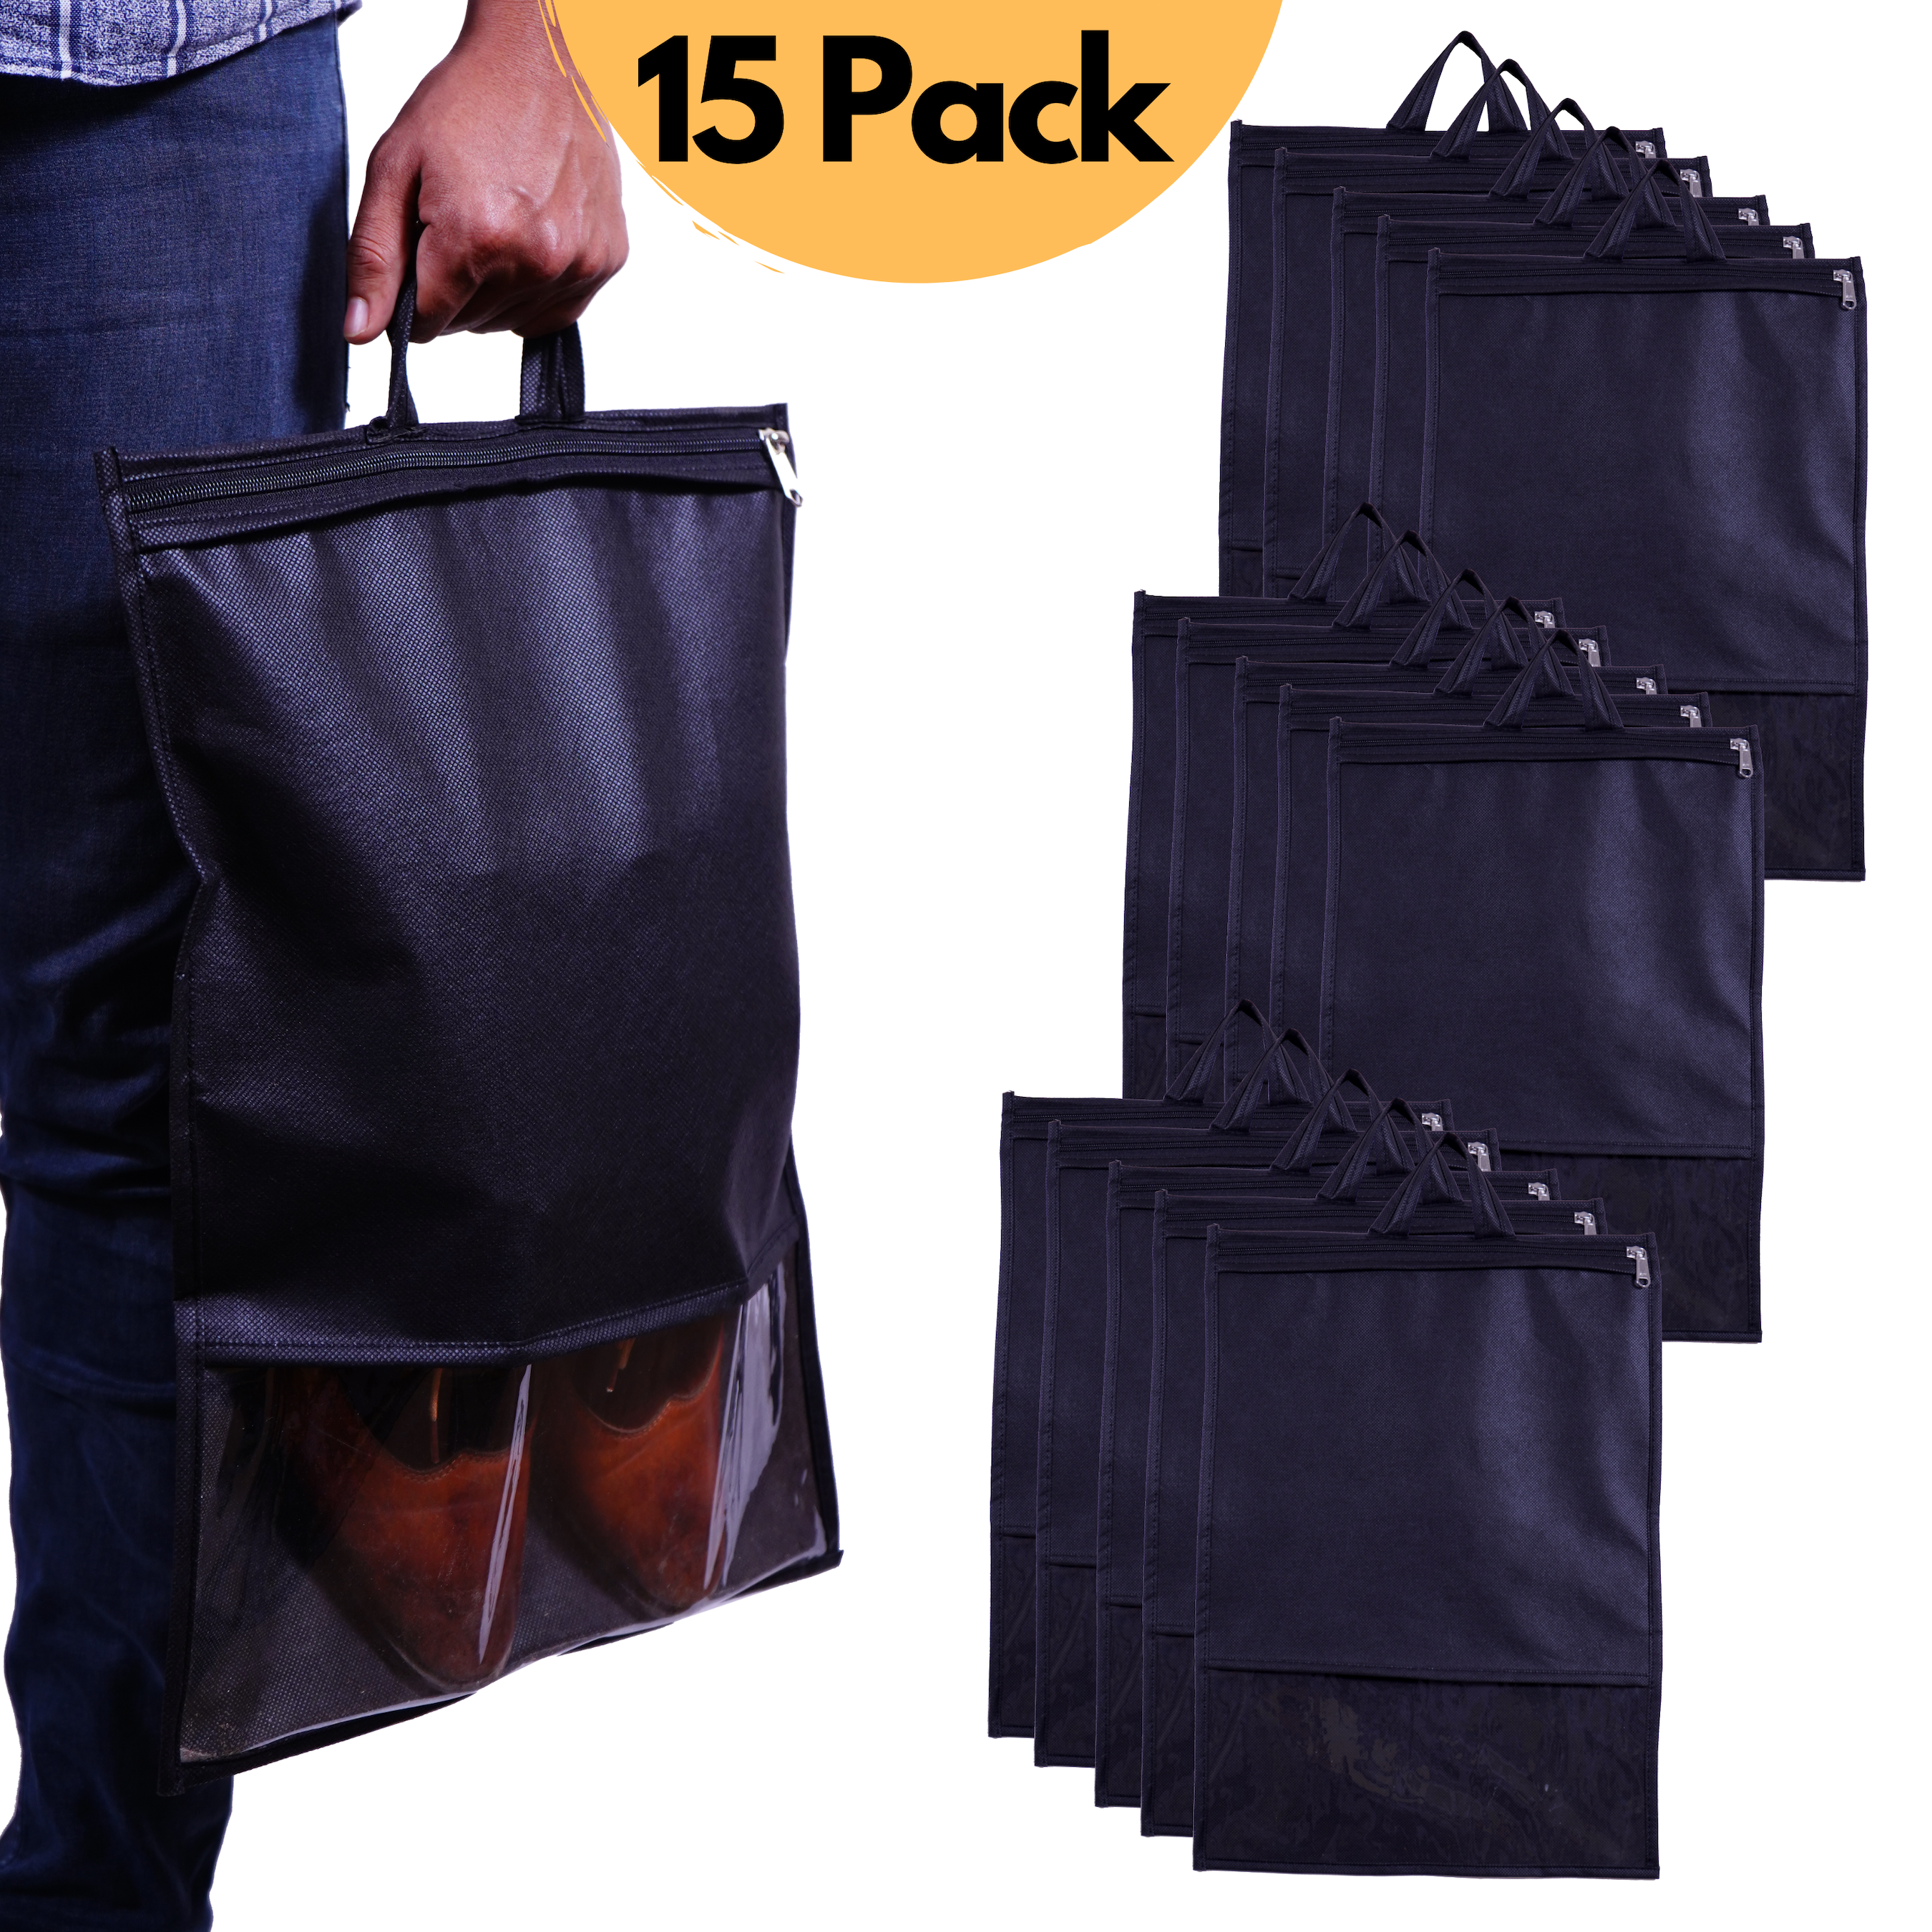 30 eco-friendly travel shoe bag storage bags, non-woven breathable